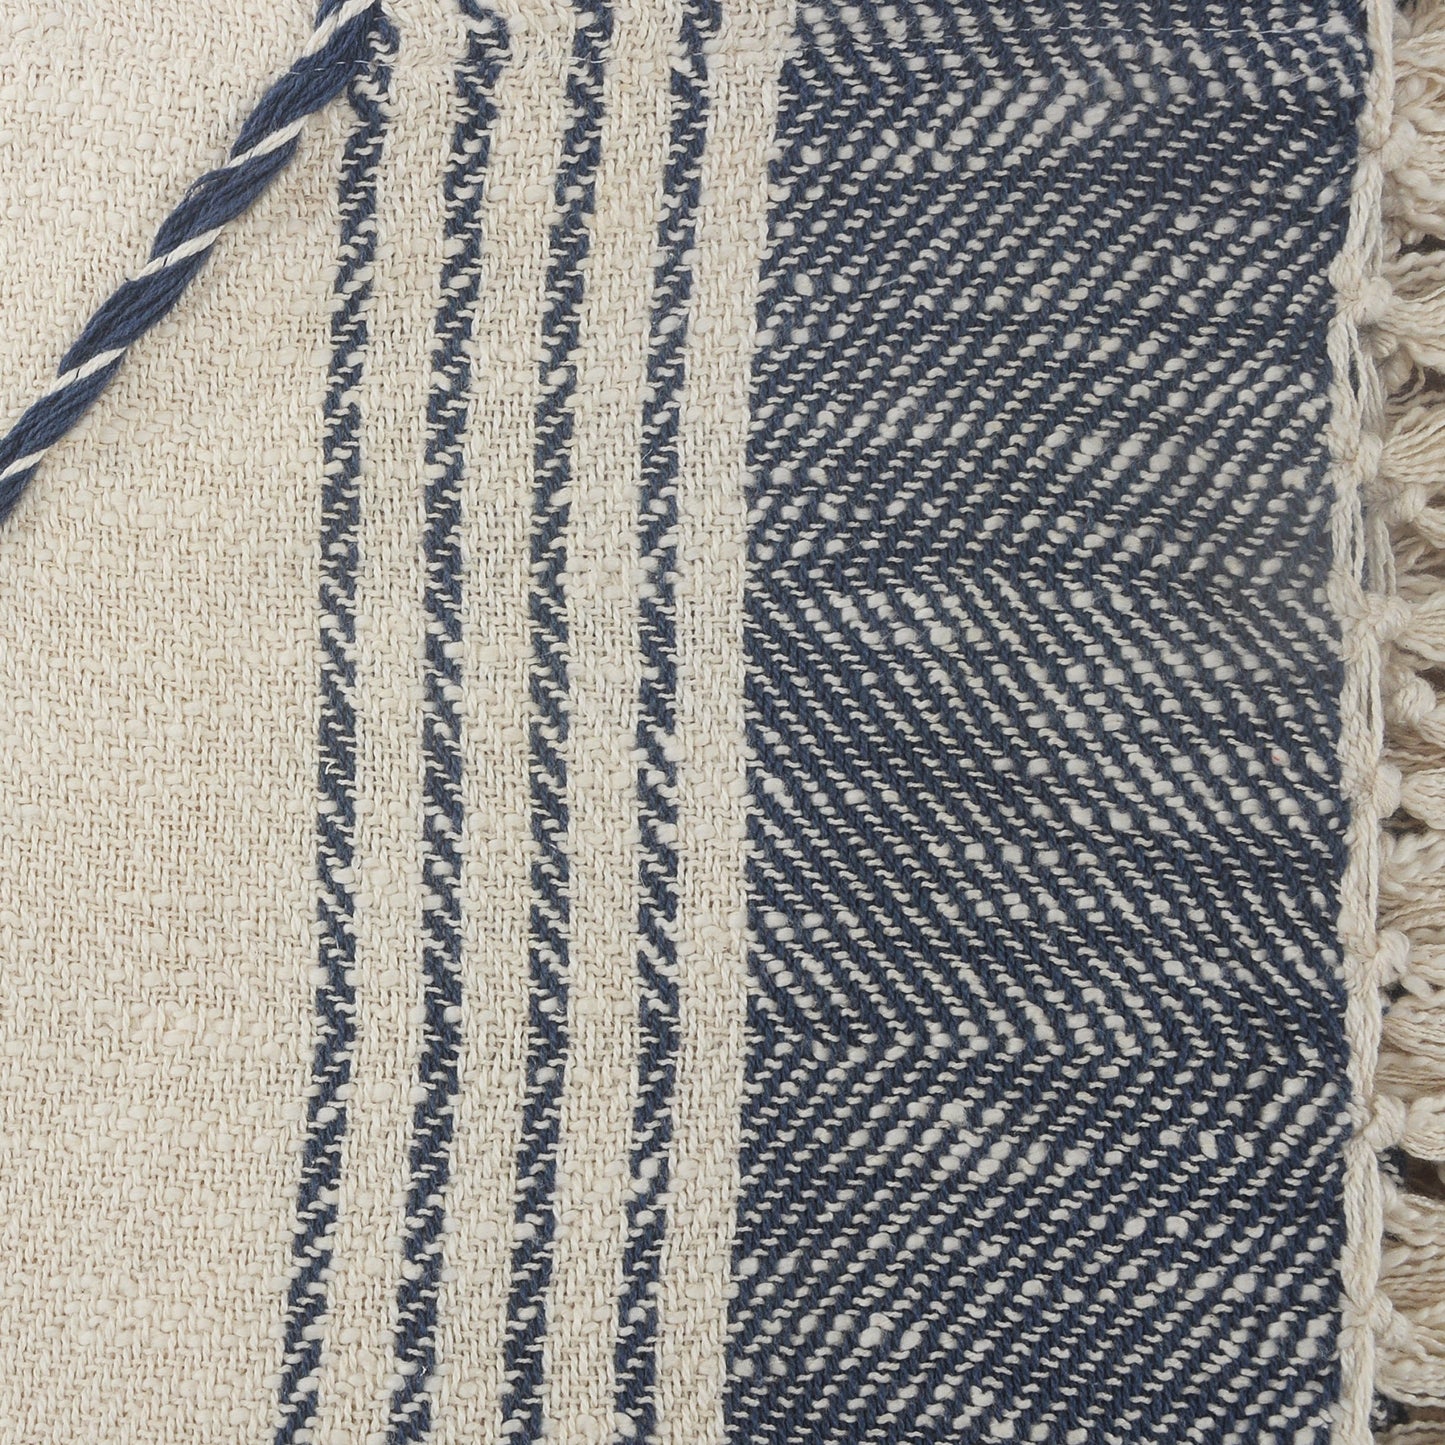 Beige Woven Cotton Striped Throw Blanket